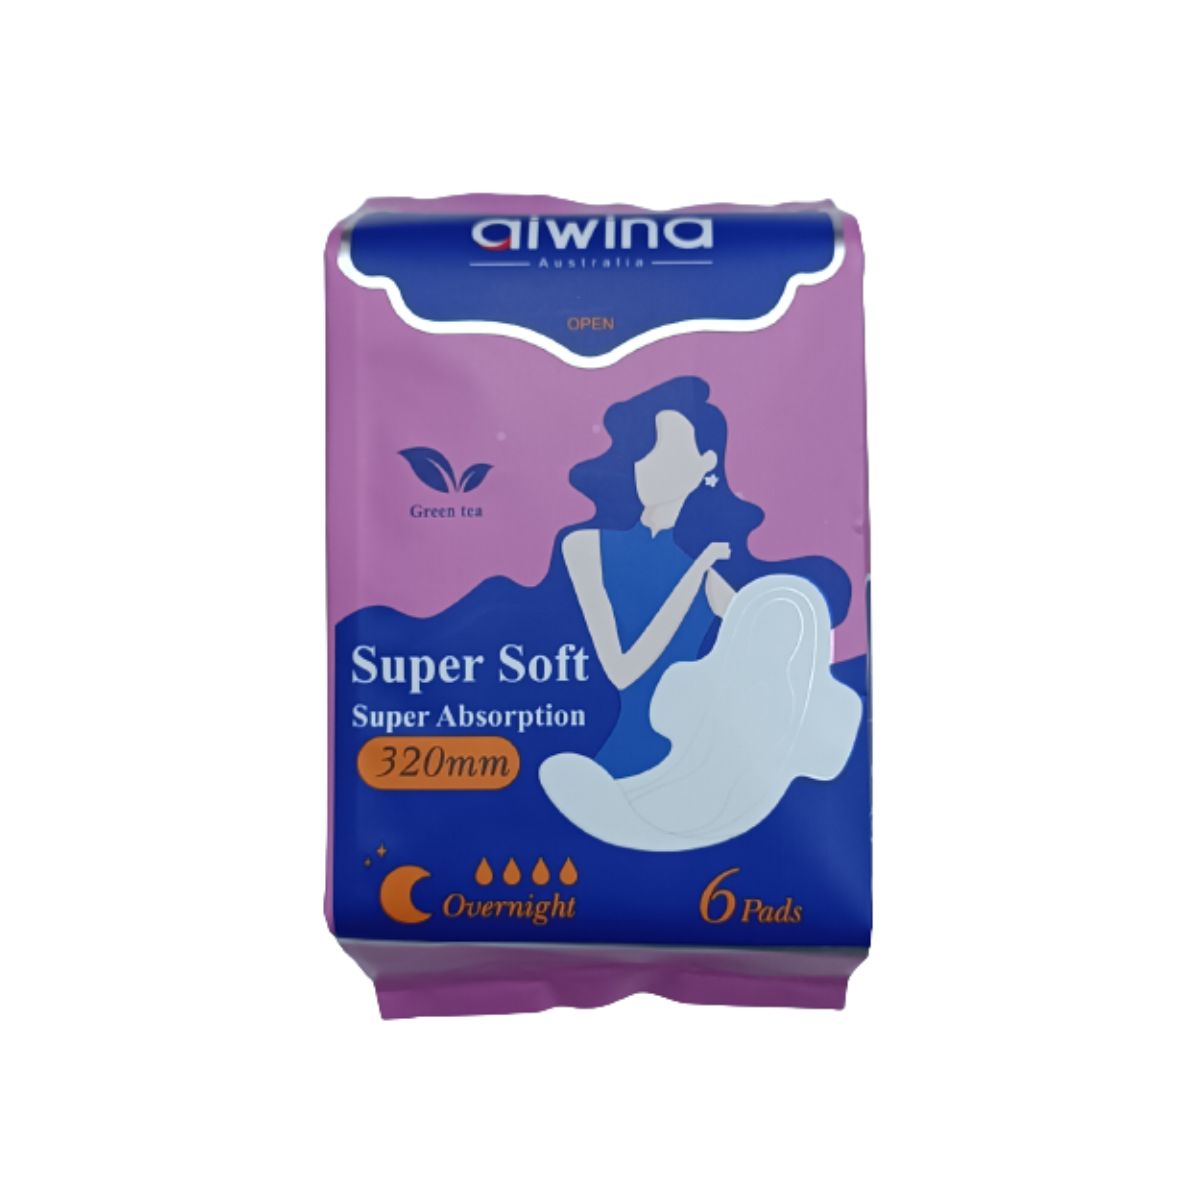 Aiwina Sanitary Napkin - Super Soft - Super Absorption - Overnight - 320mm - 6pads